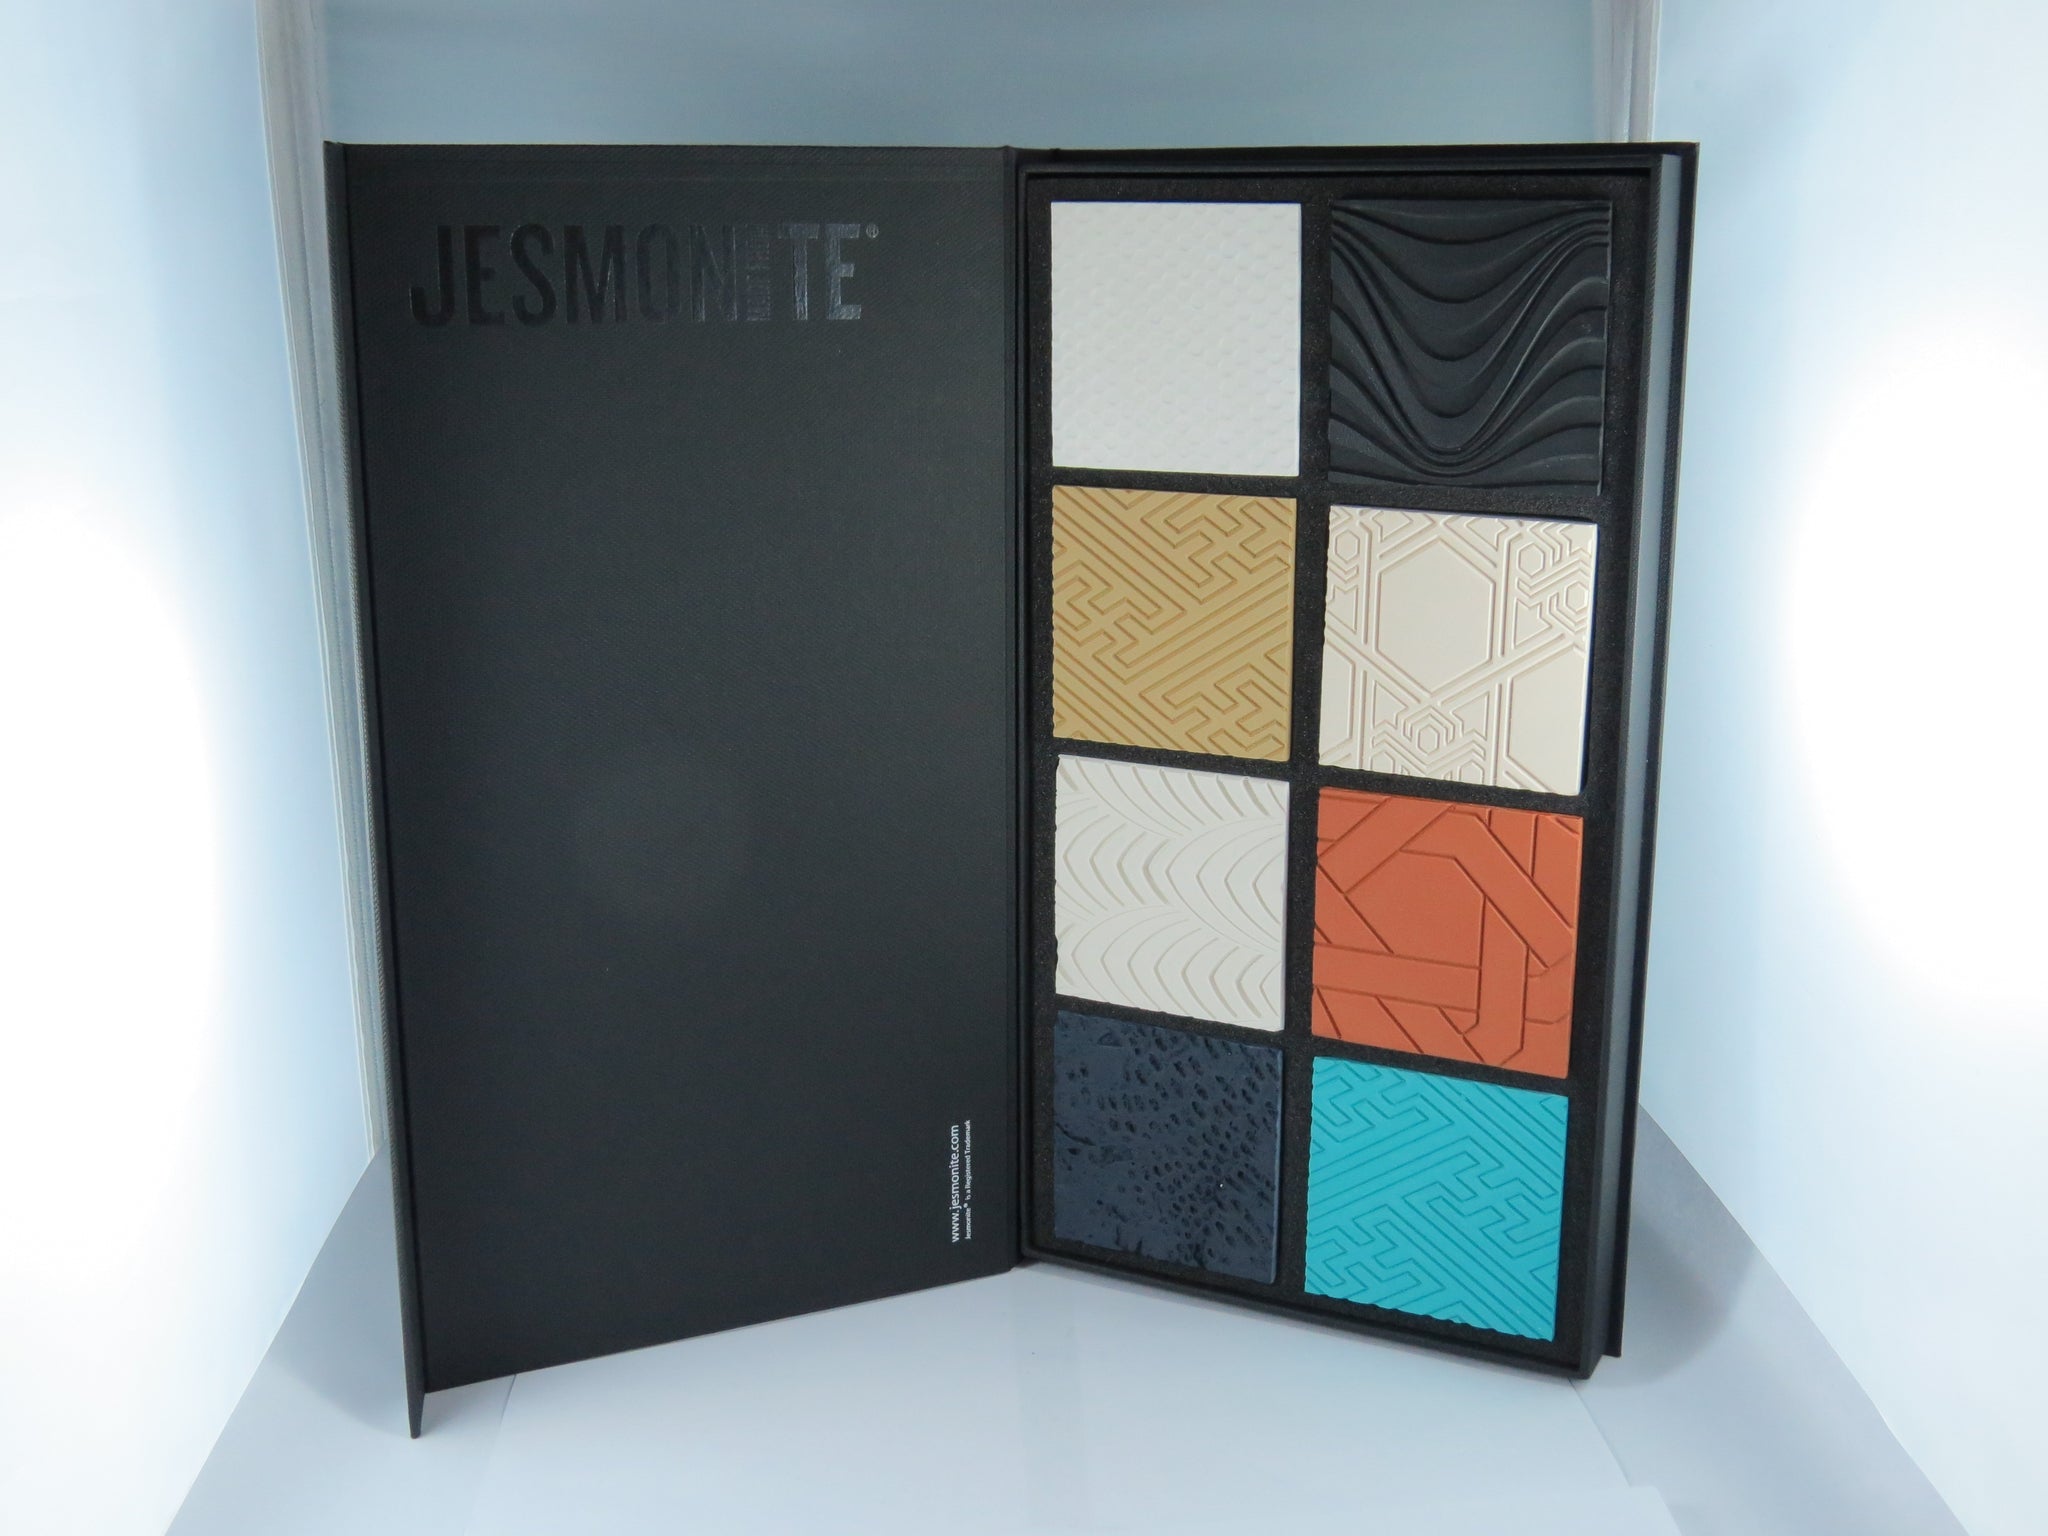 Sample Box - Buy Jesmonite